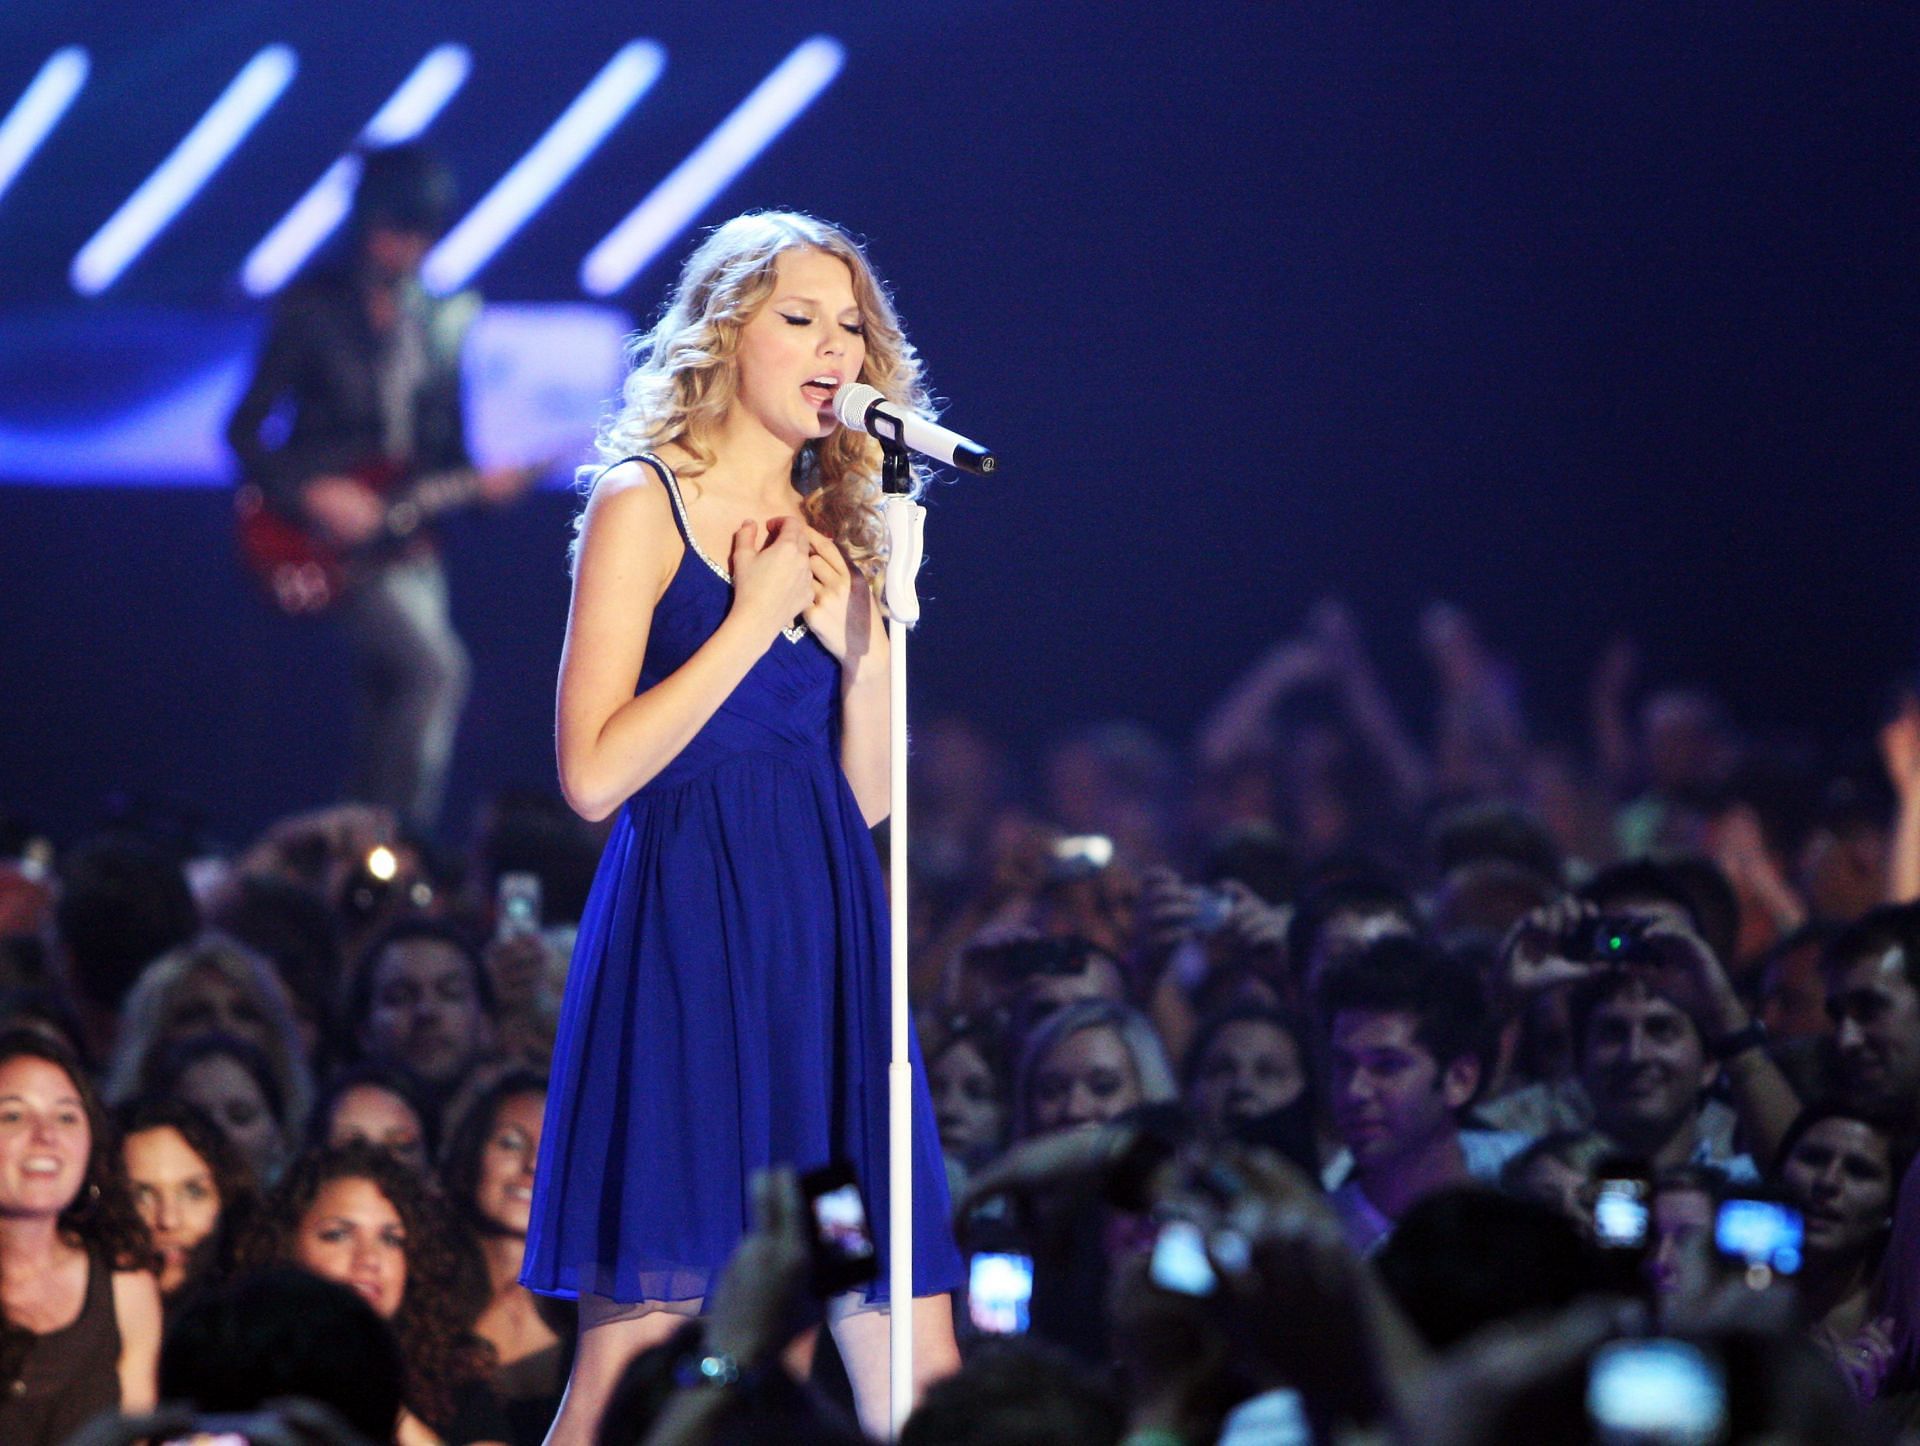 2009 CMT Music Awards - Show (Photo by Jason Merritt/Getty Images)